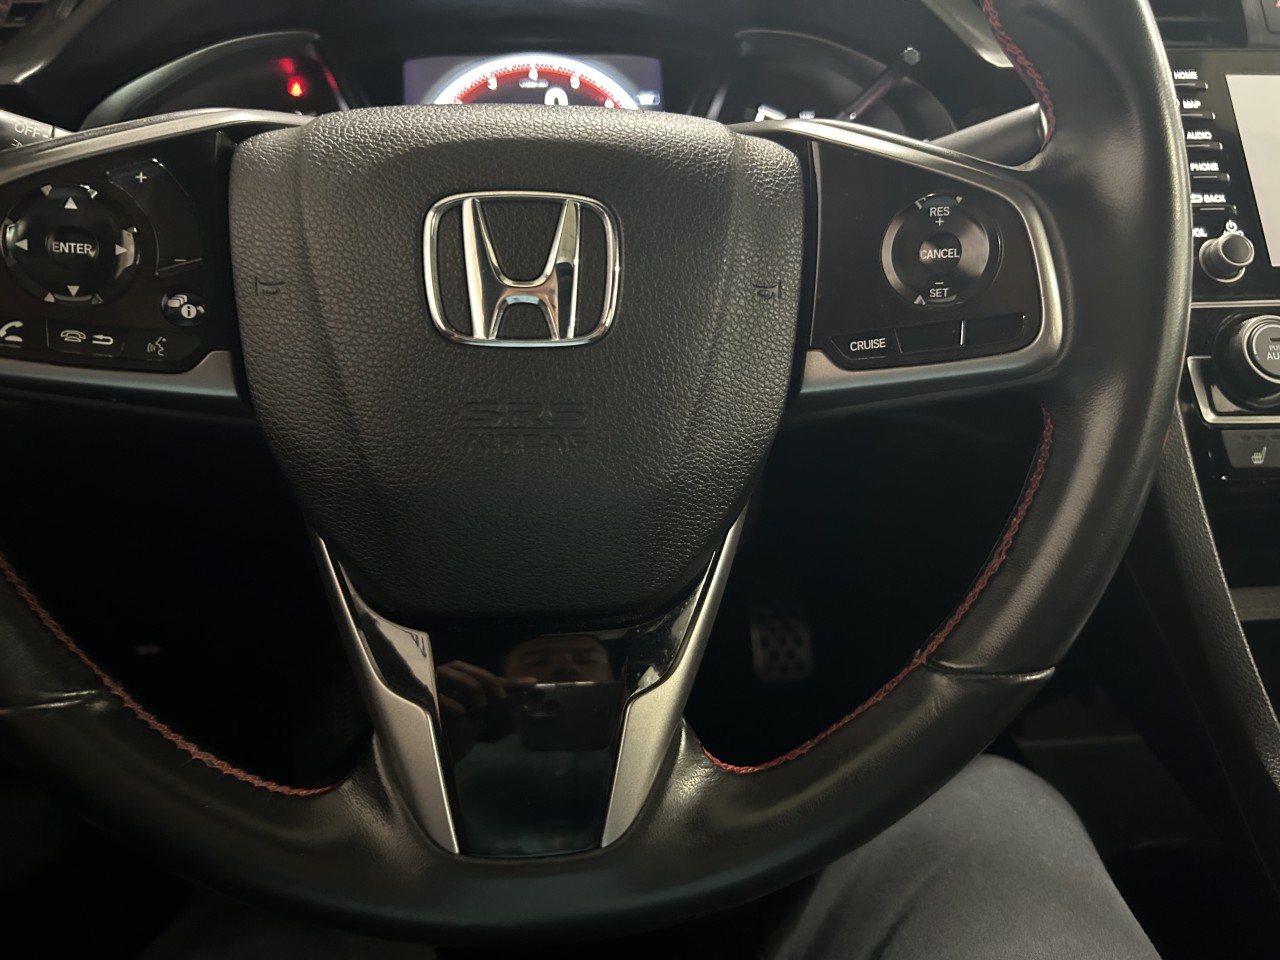 2019 Honda Civic SI Main Image